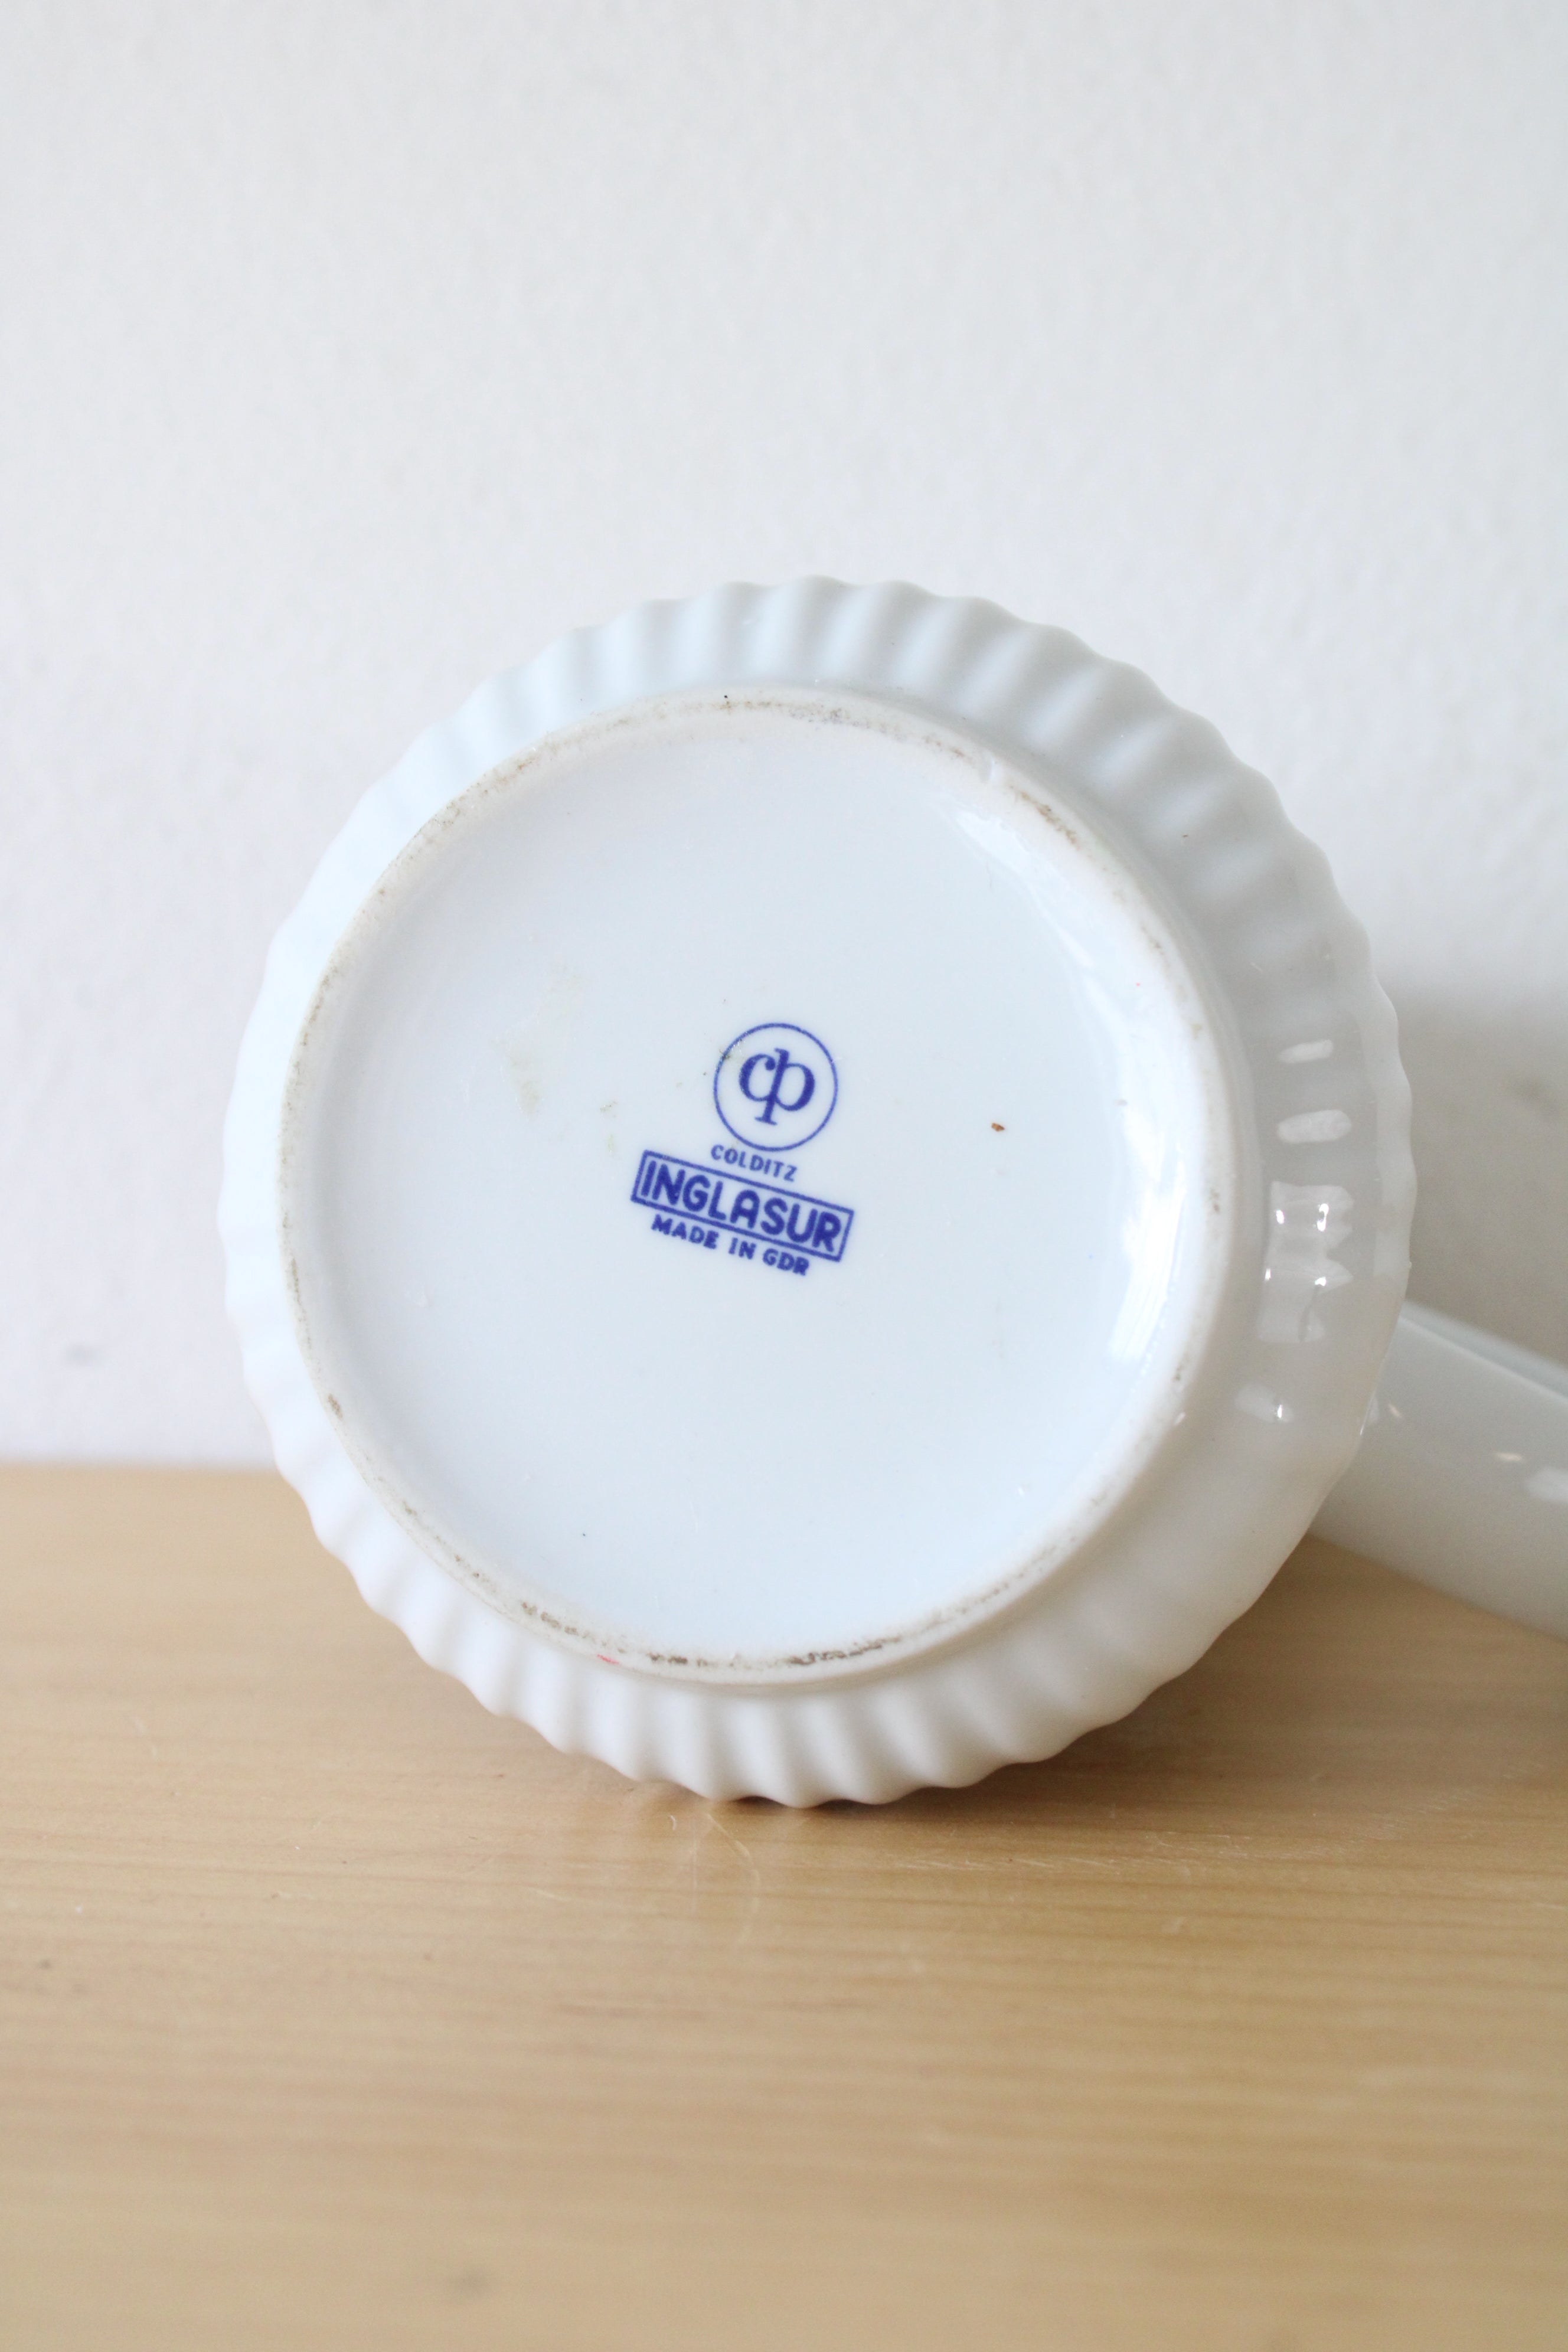 CP Coldtiz Inglasur Made IOn GDR Lolditz 1950 Ceramic Mug